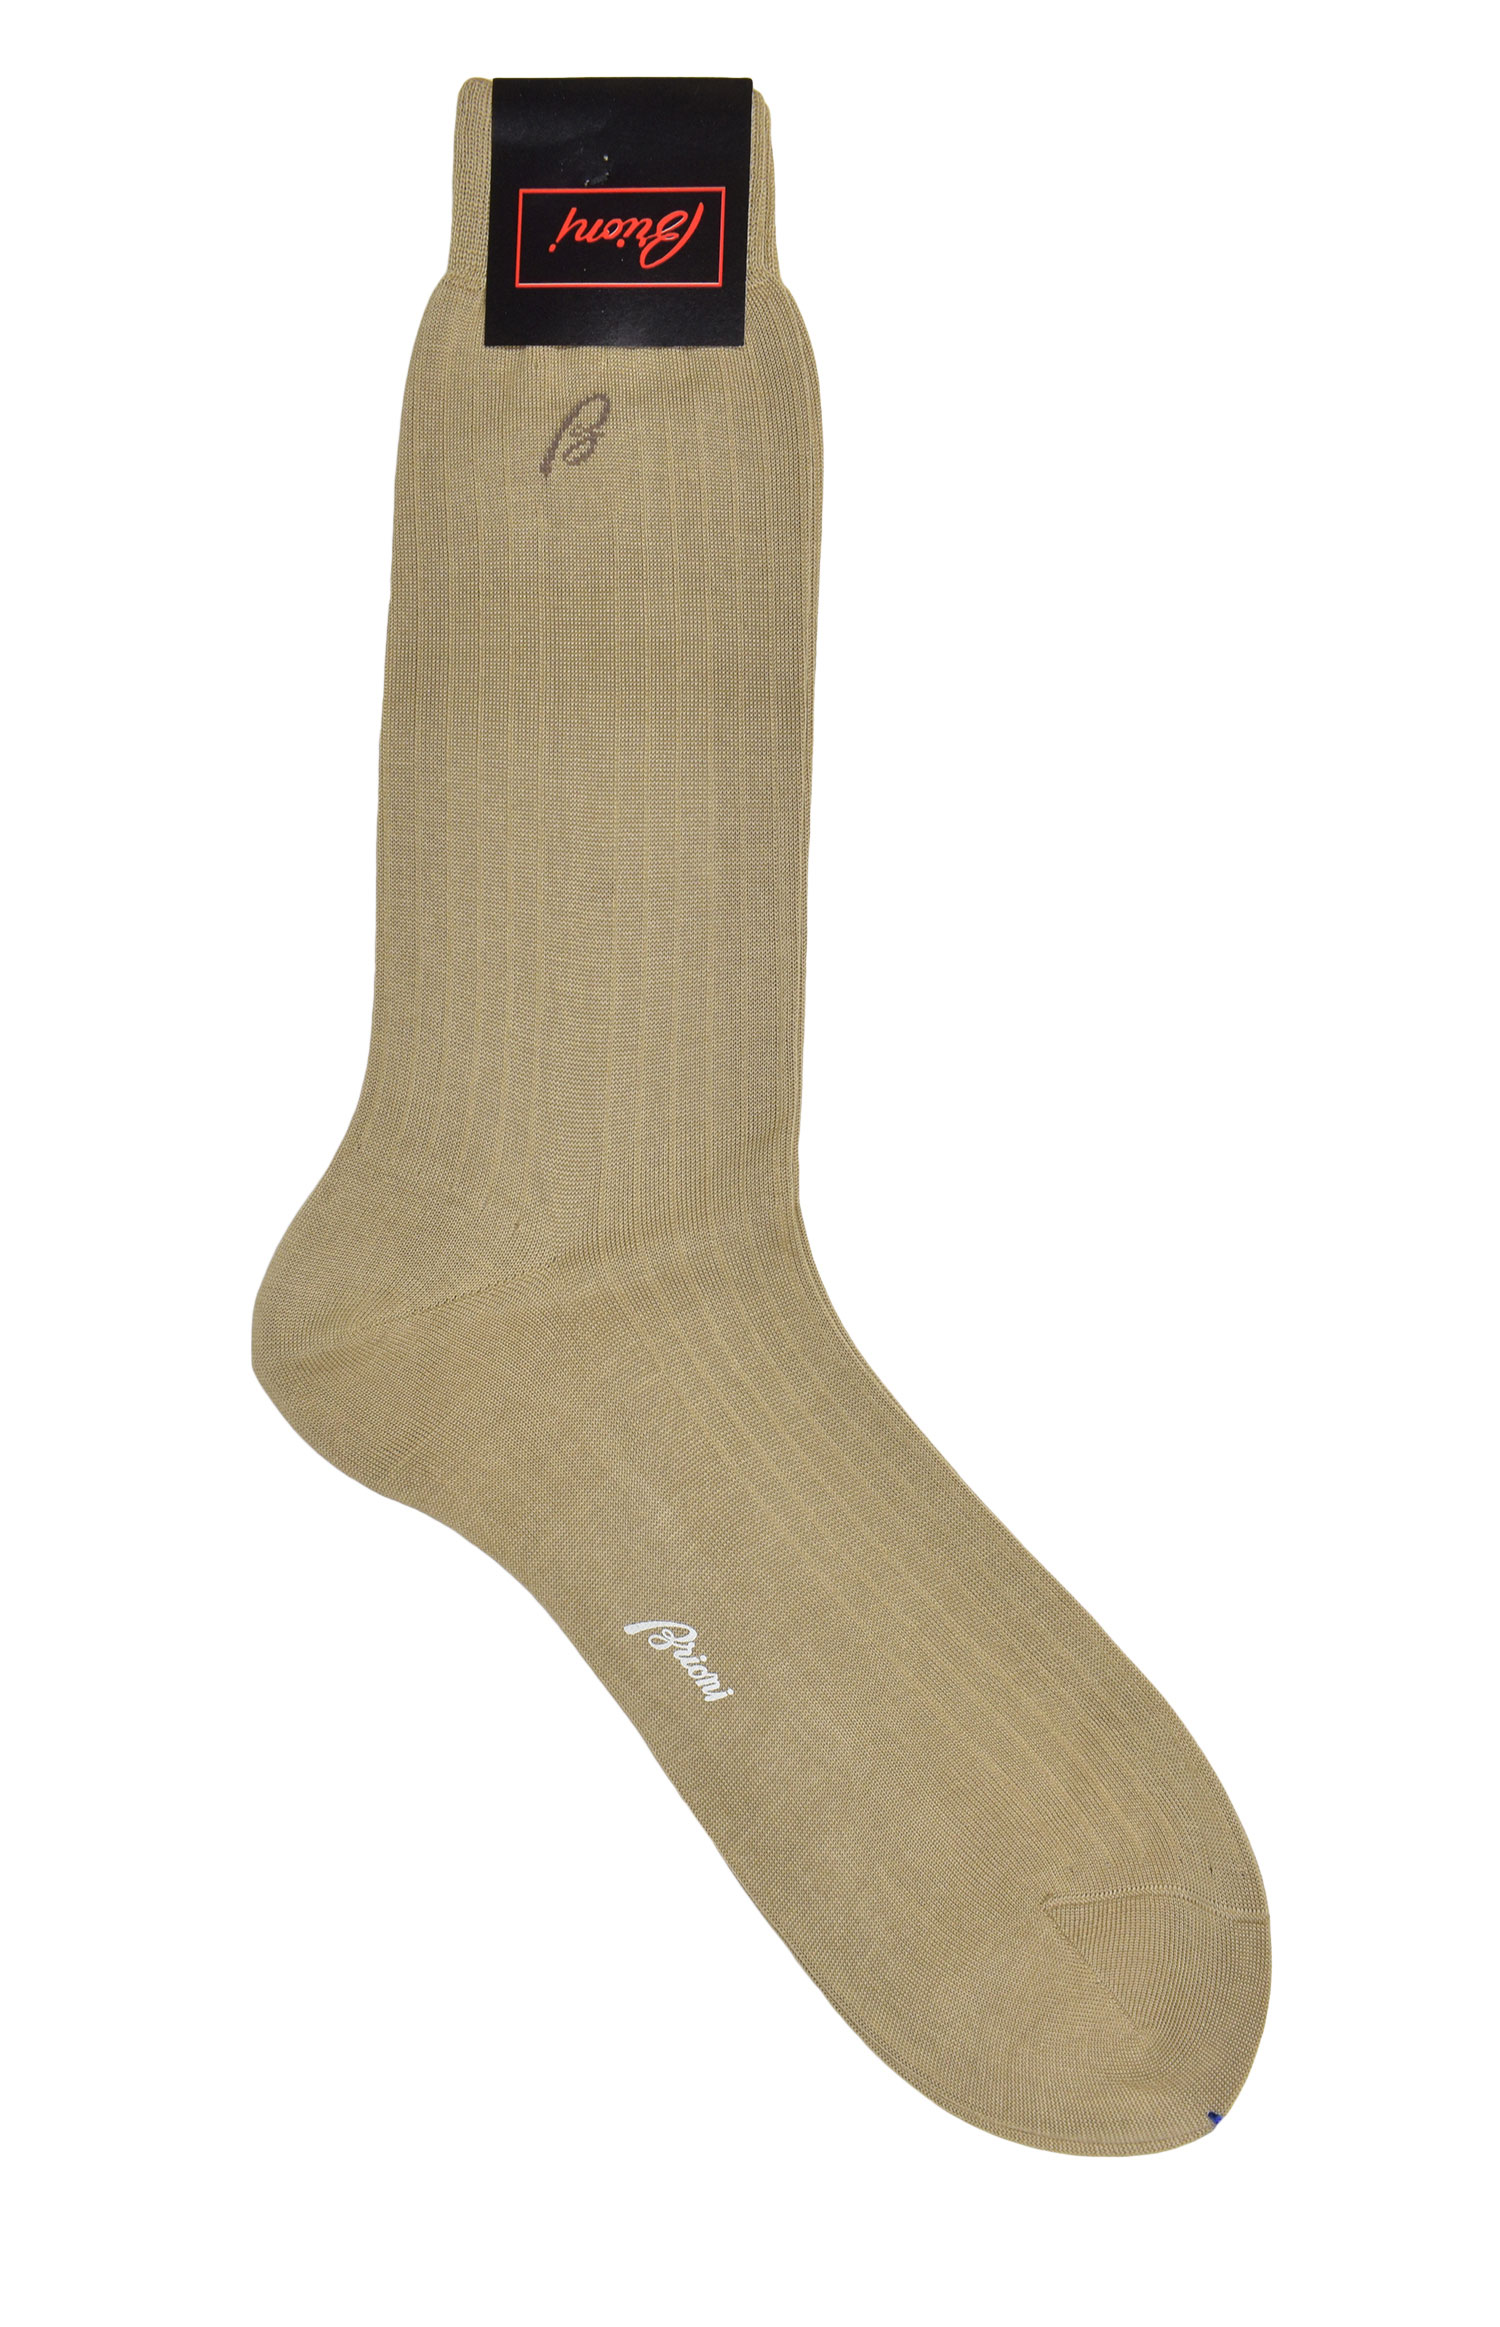 Brioni Men's Light Brown 100% Cotton Ribbed Knit Socks (11.5)